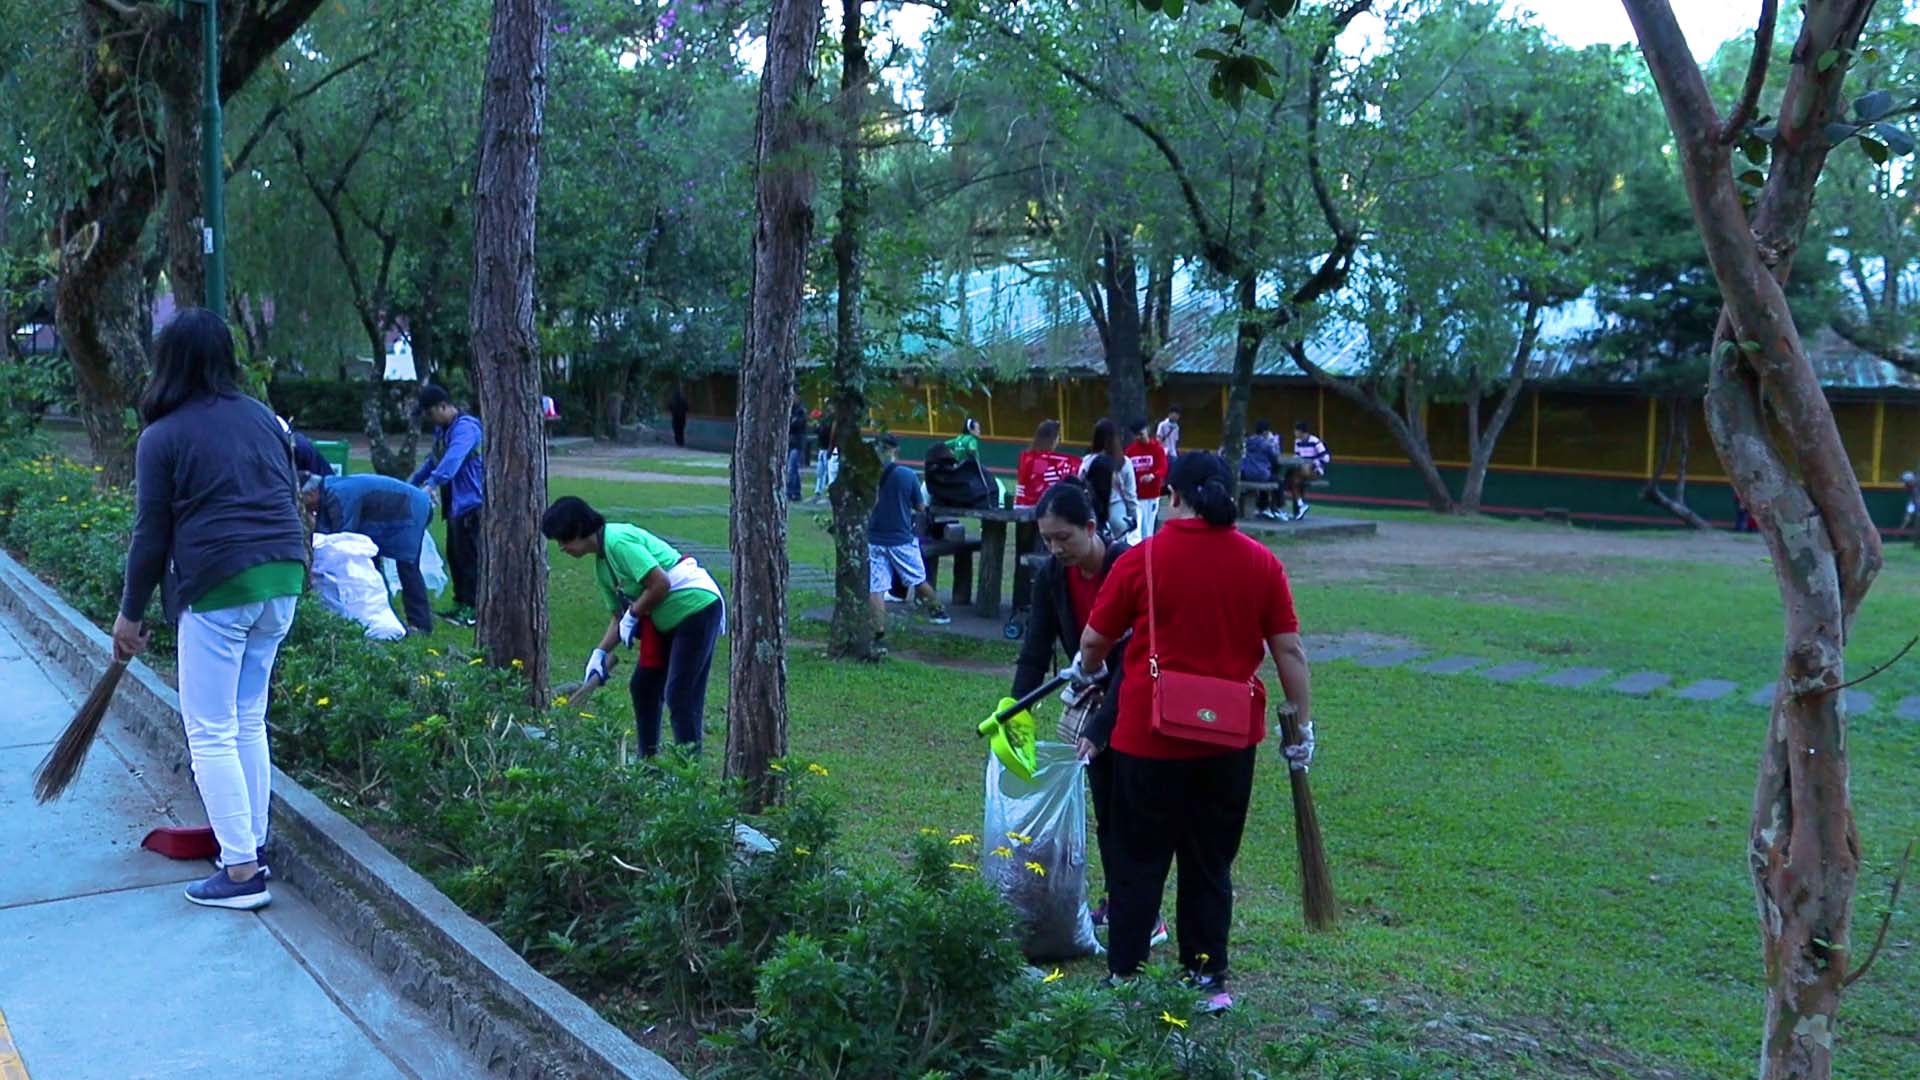 Benguet District conducts clean up activity in Burnham Park